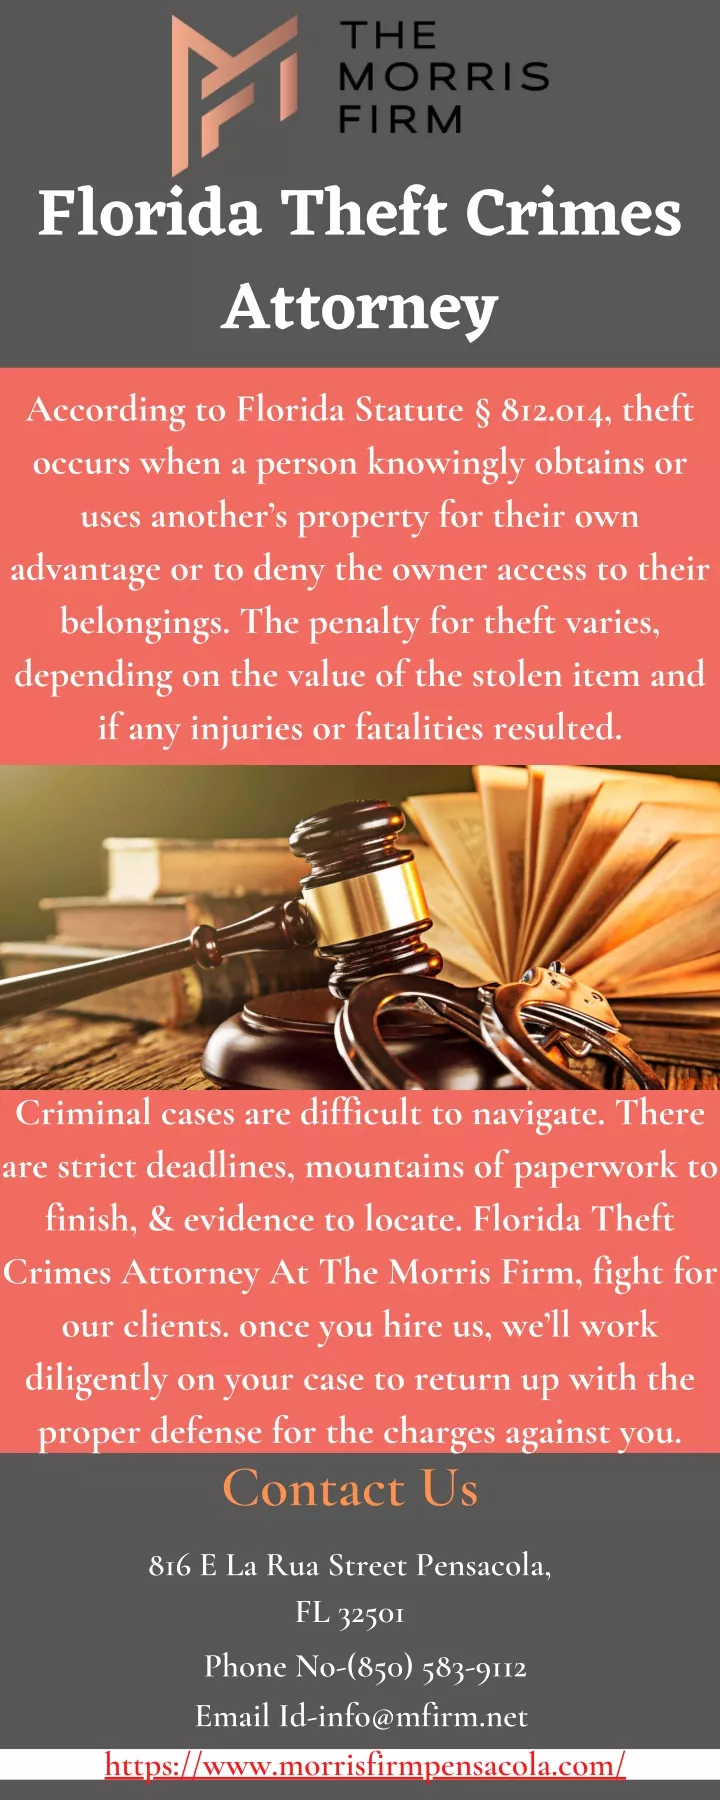 florida theft crimes attorney according